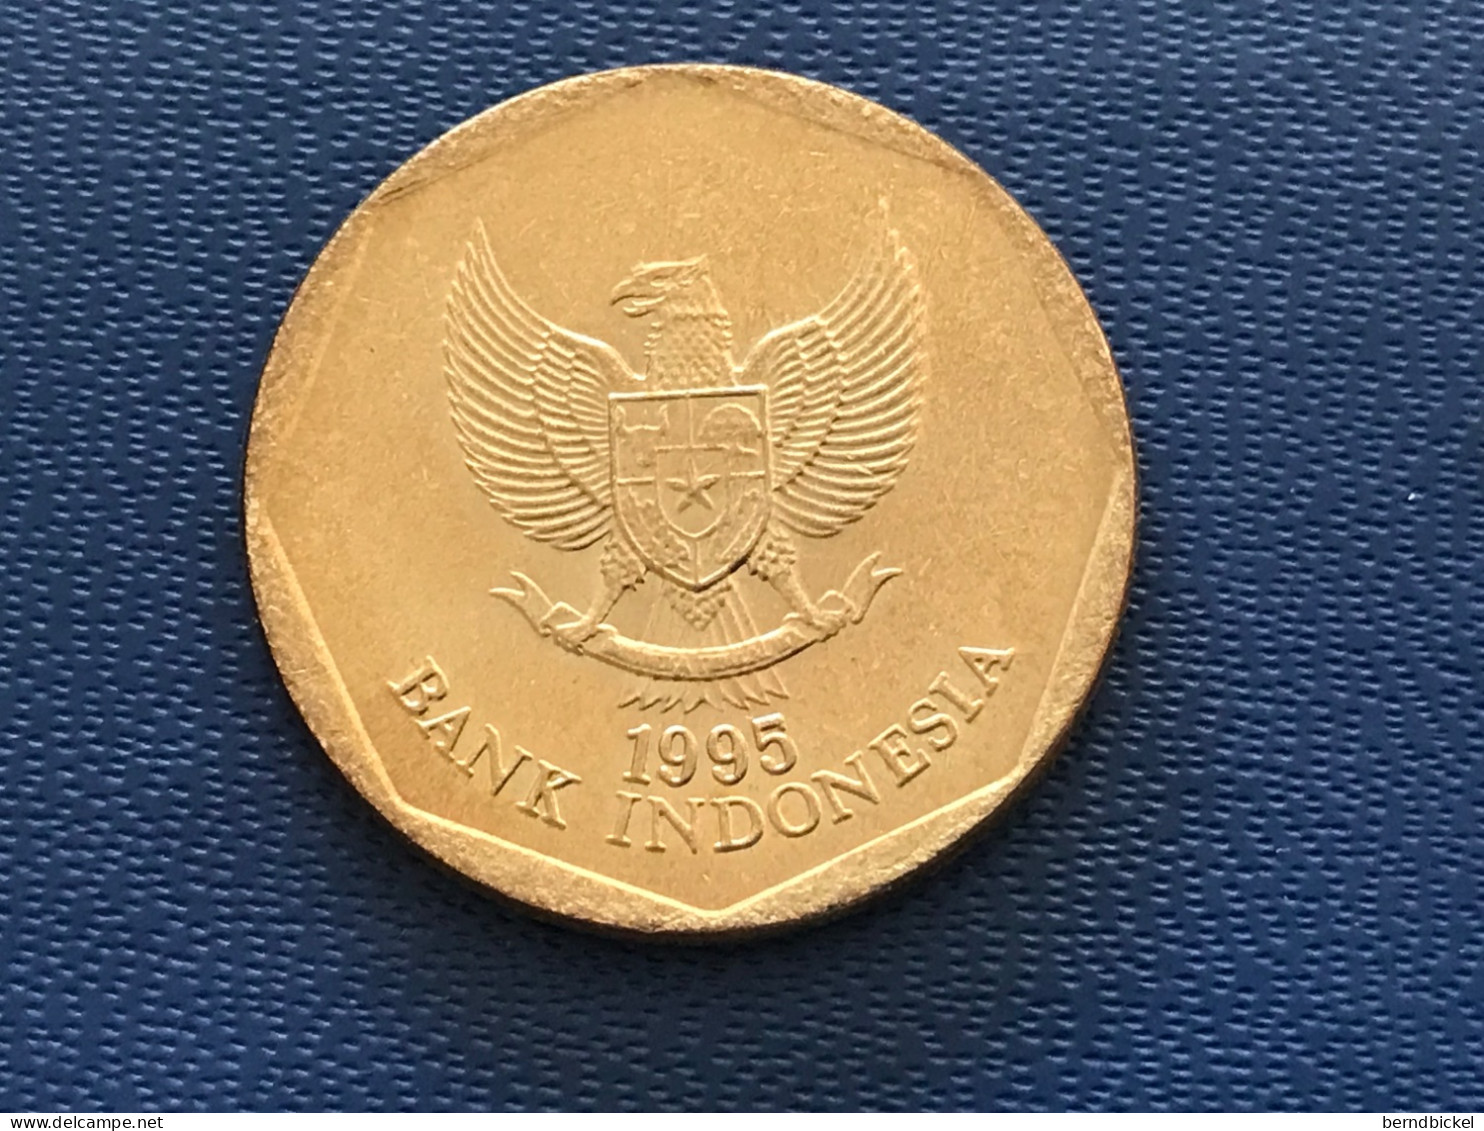 Münze Münzen Umlaufmünze Indonesien 100 Rupien 1995 - Indonesien